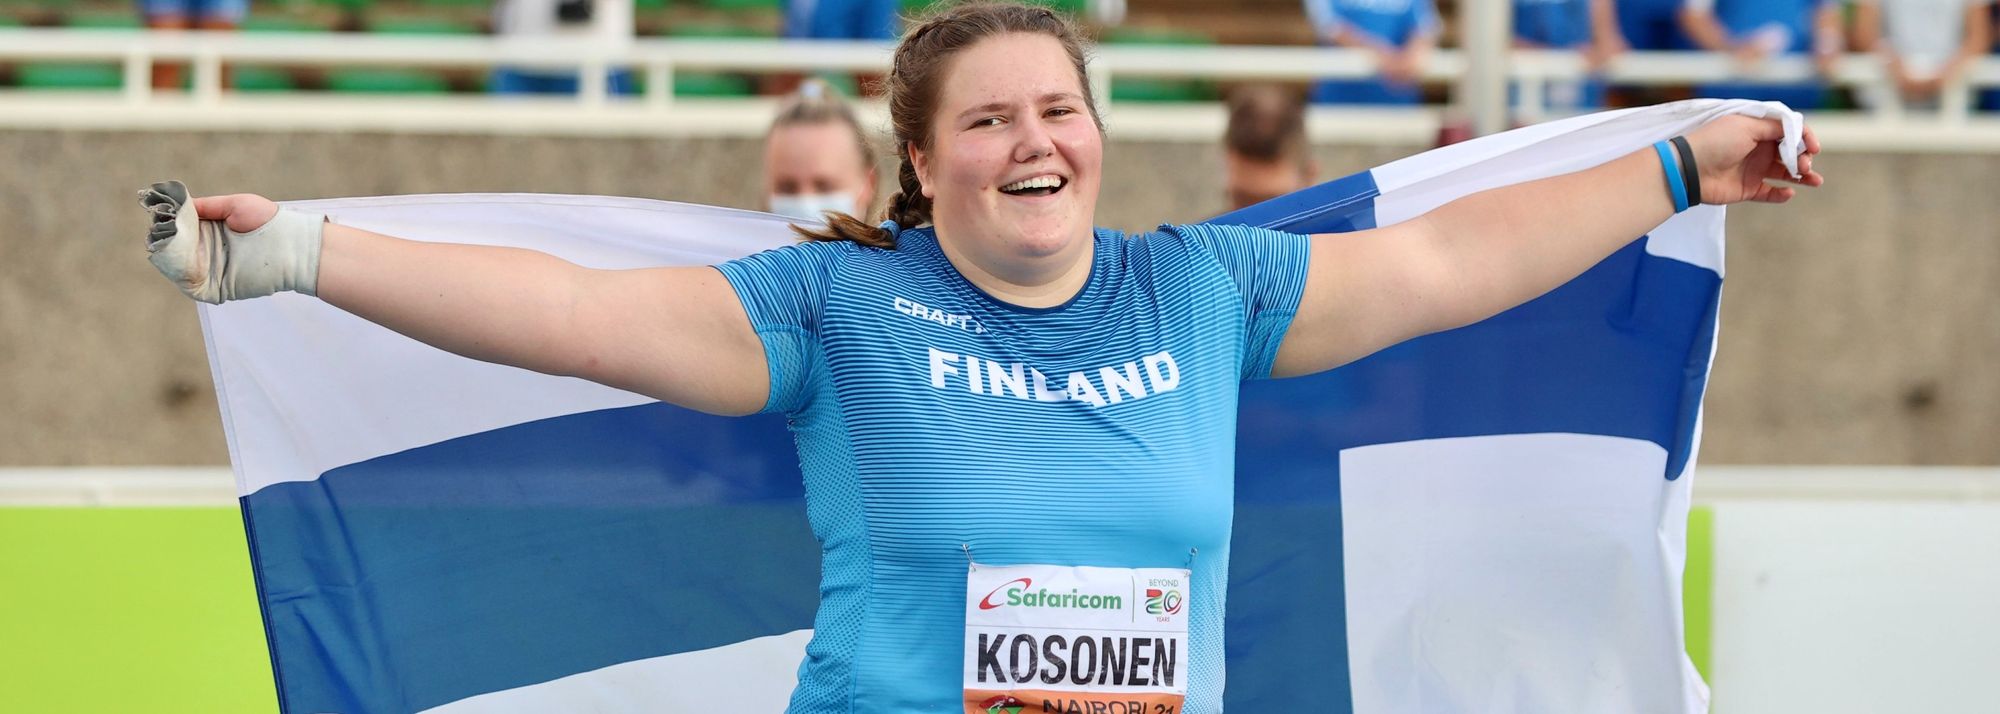 Silja Kosonen broke the championship record to get gold in Nairobi.